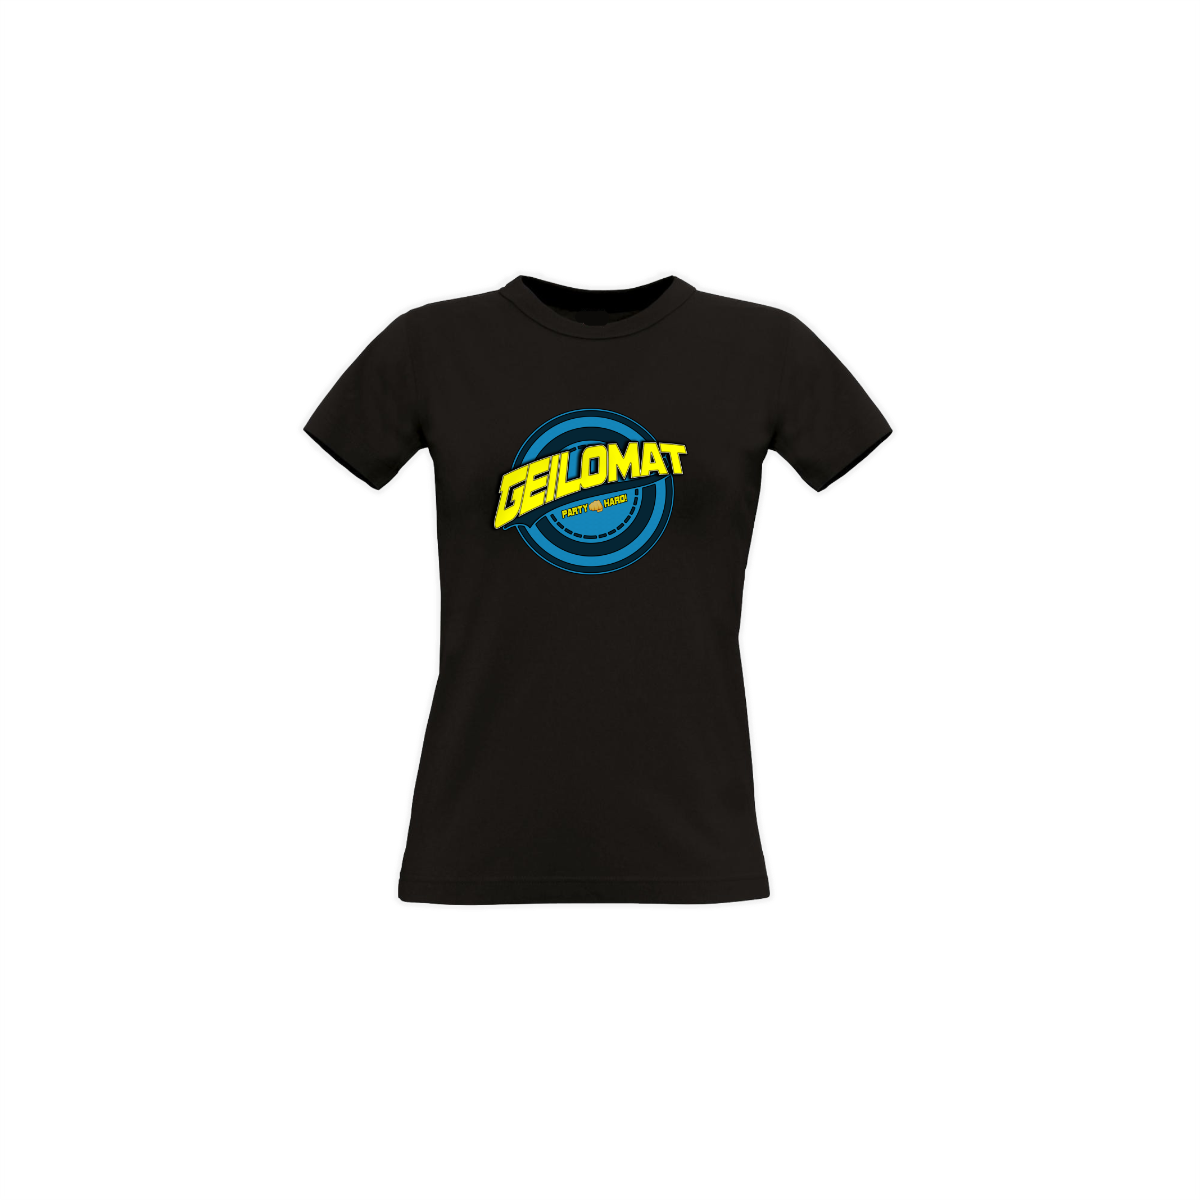 Girly-Shirt "GEILOMAT Logo" (bunt) schwarz